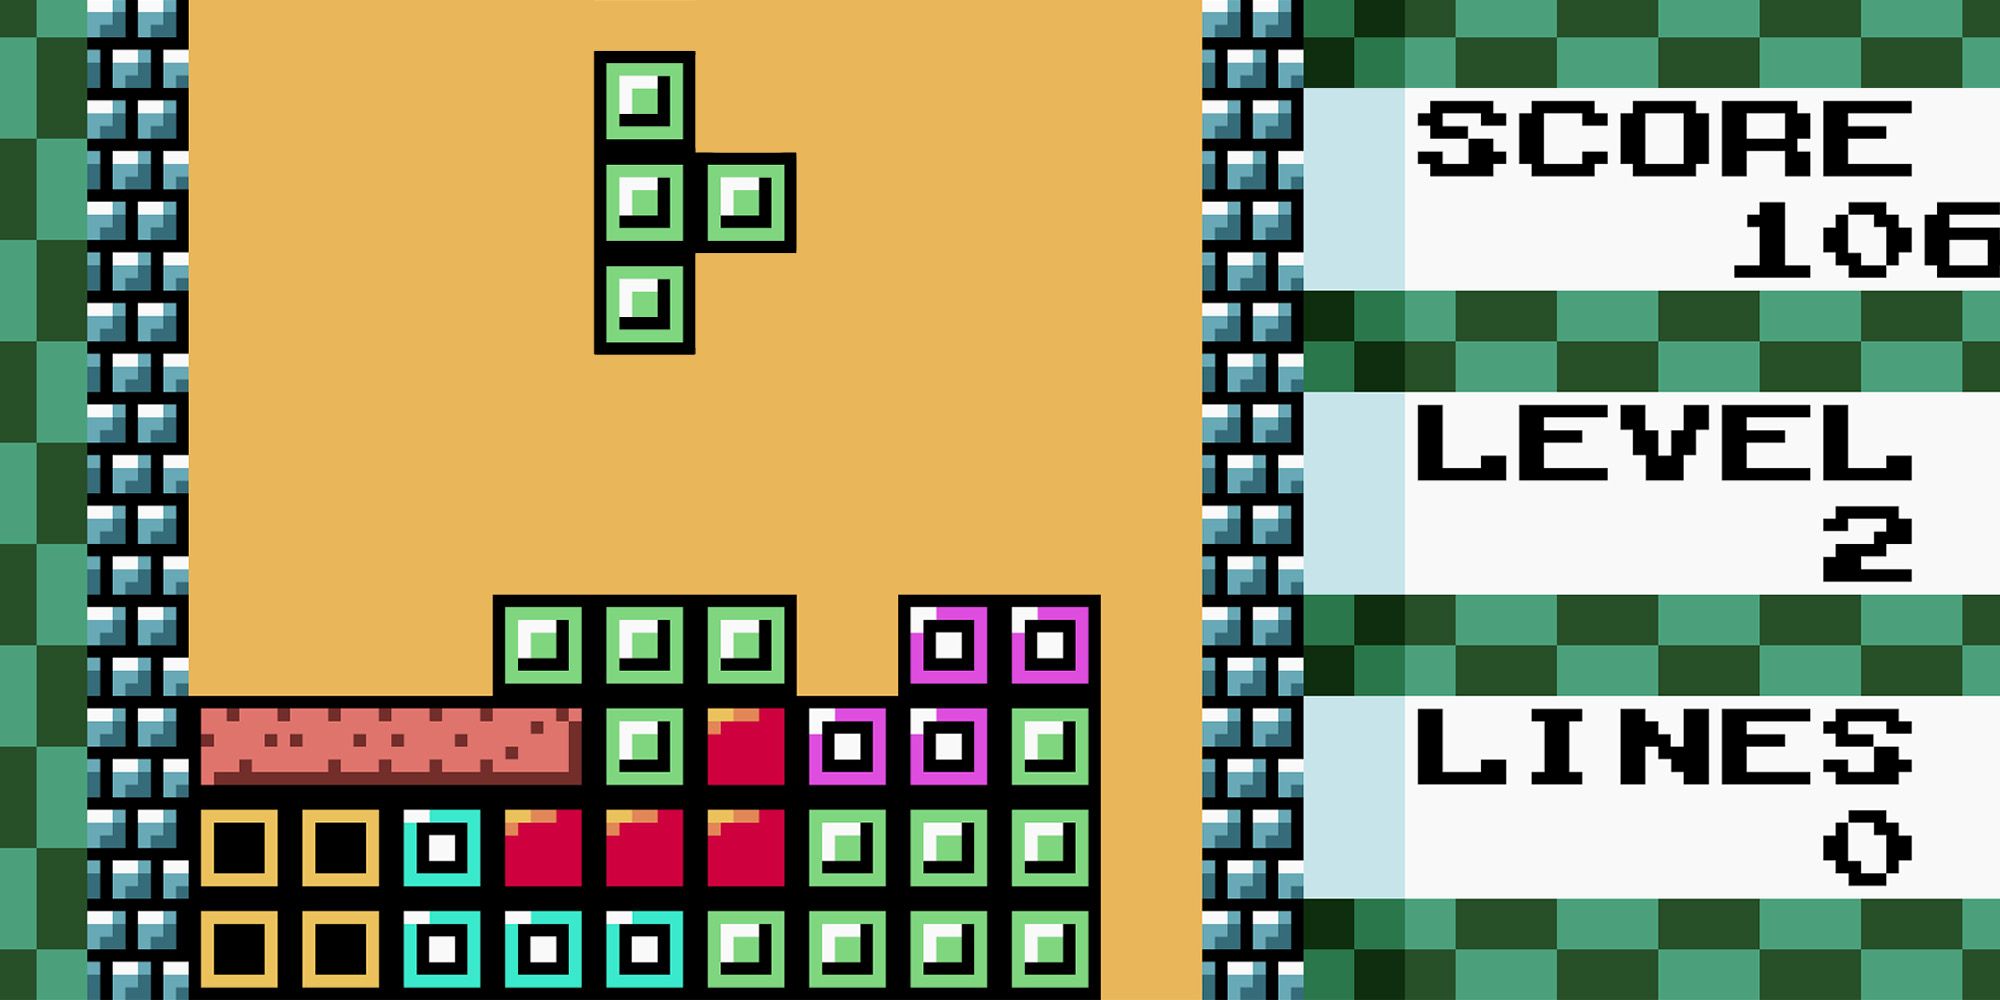 Tetris DX - A Tetris Piece Falling Onto A Pile Of Tetris Pieces